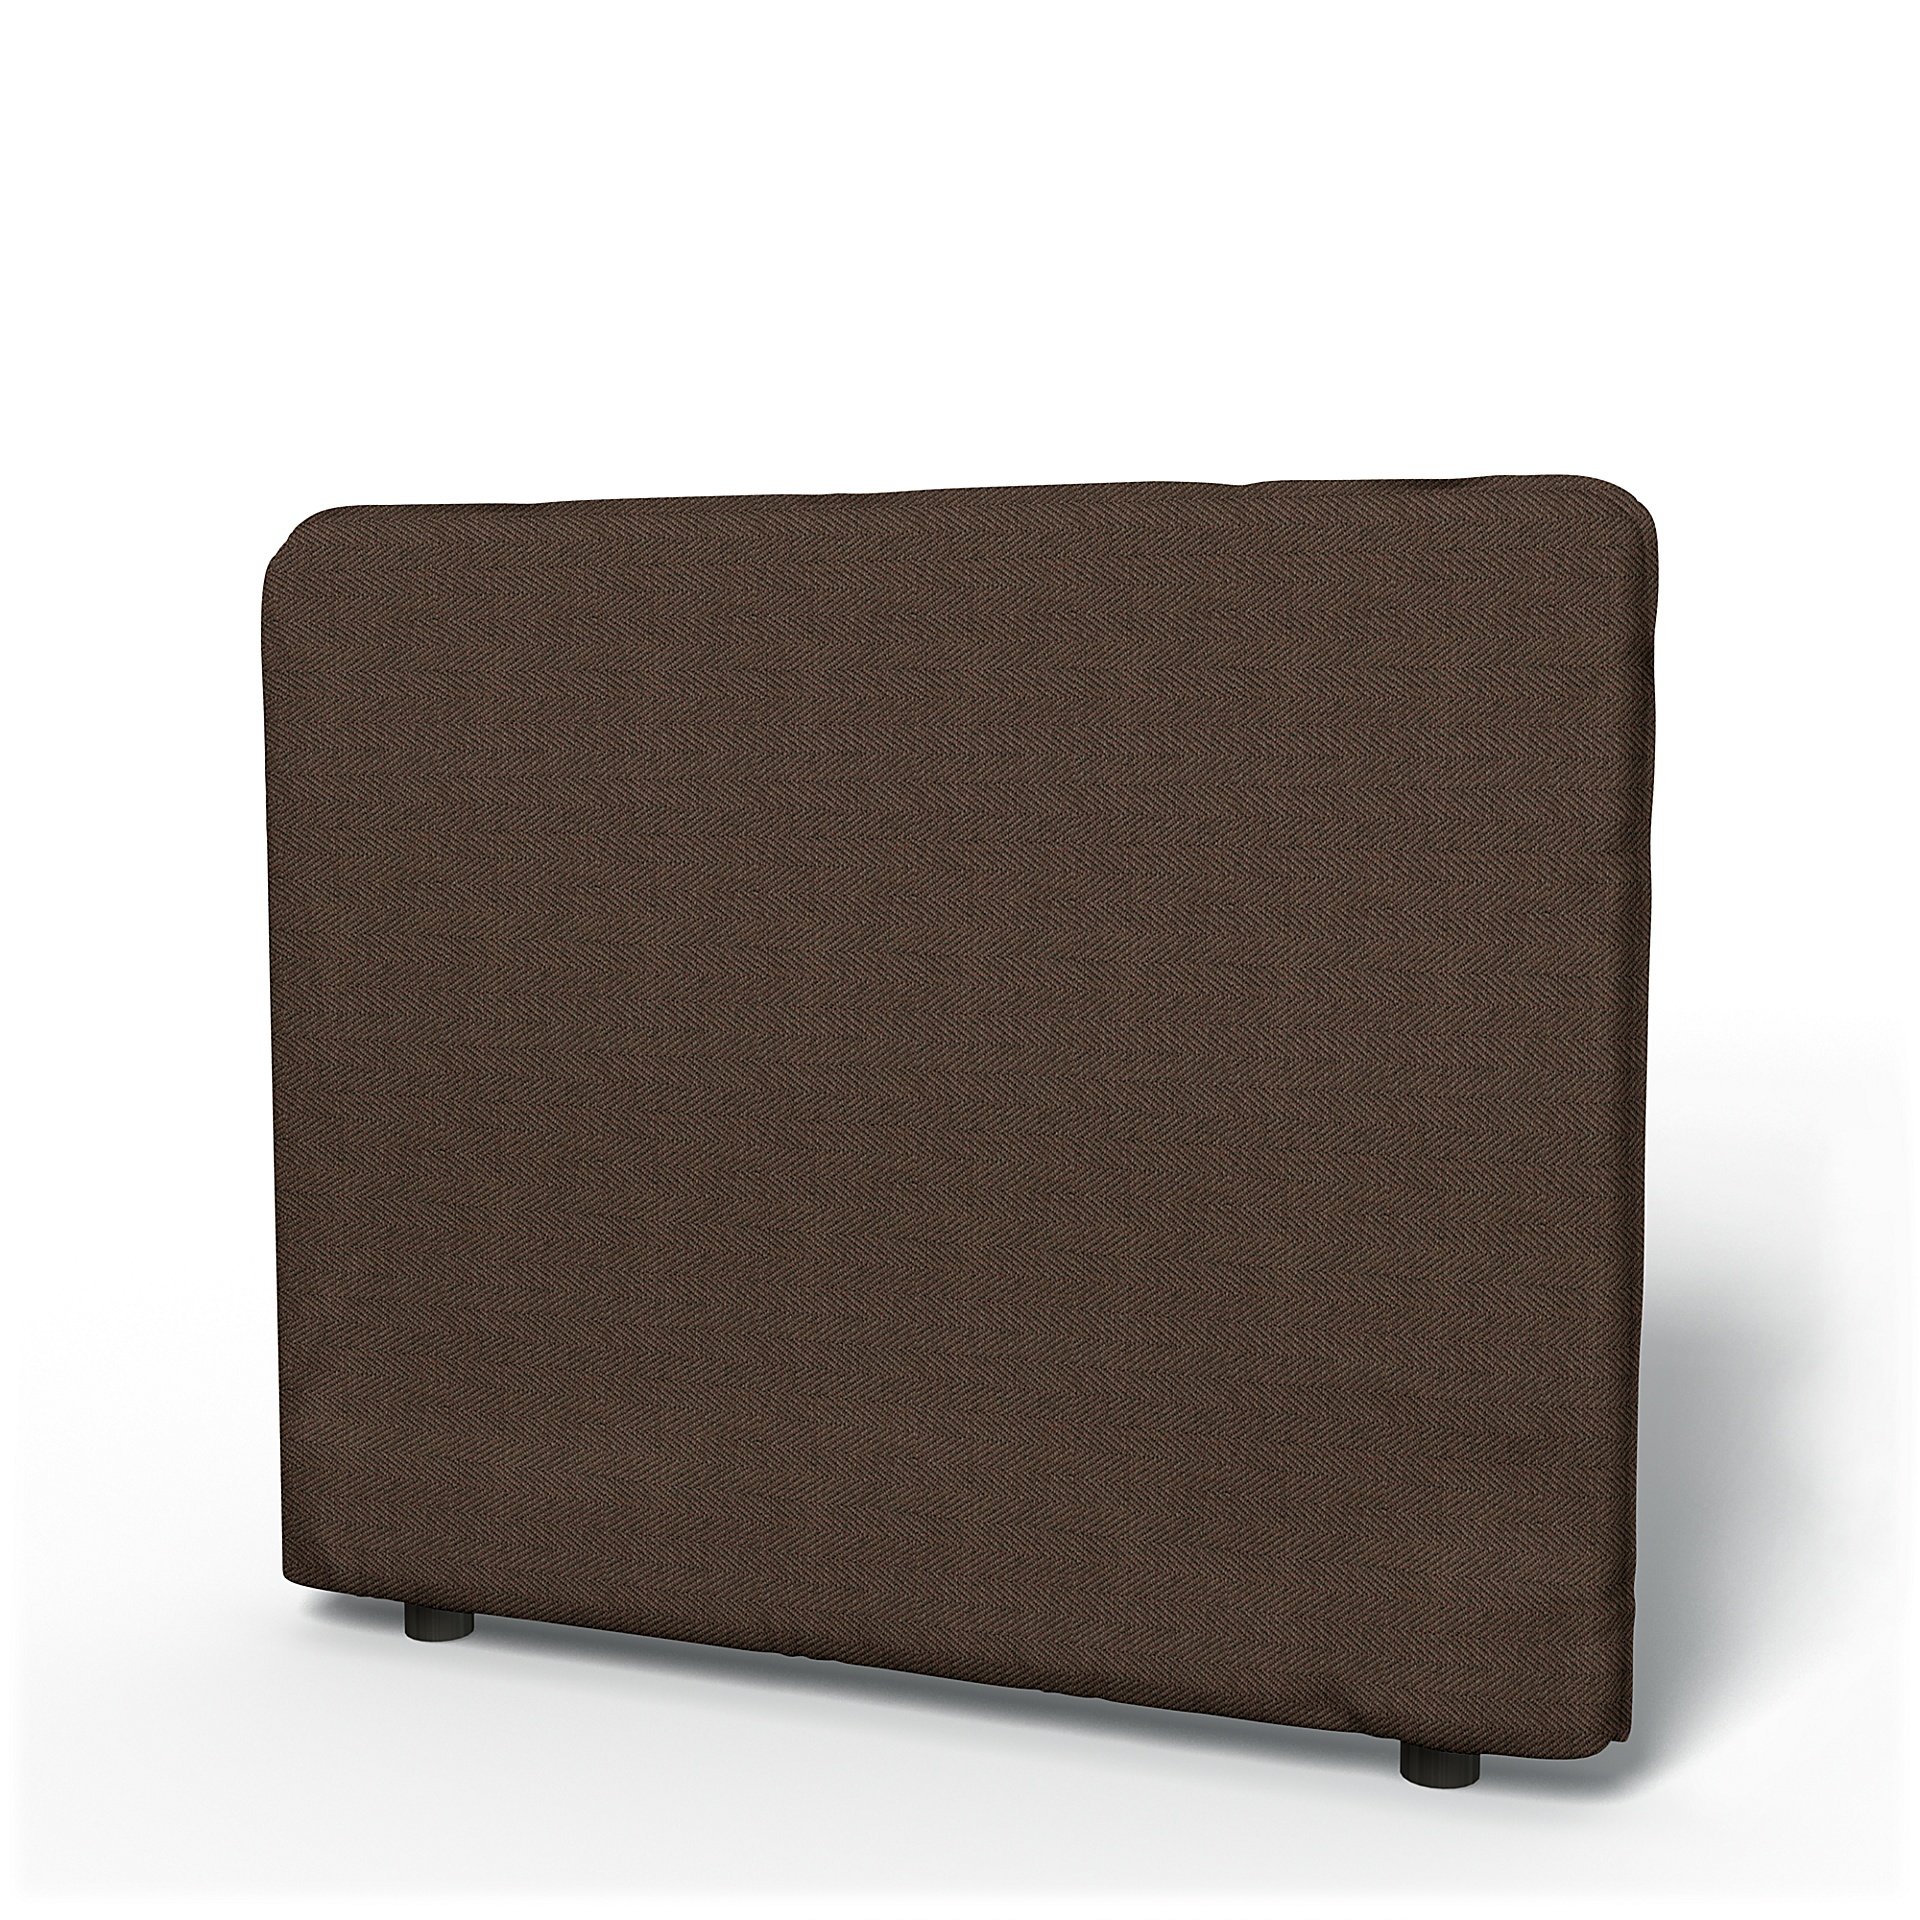 IKEA - Vallentuna Low Backrest Cover 100x80cm 39x32in, Chocolate, Boucle & Texture - Bemz